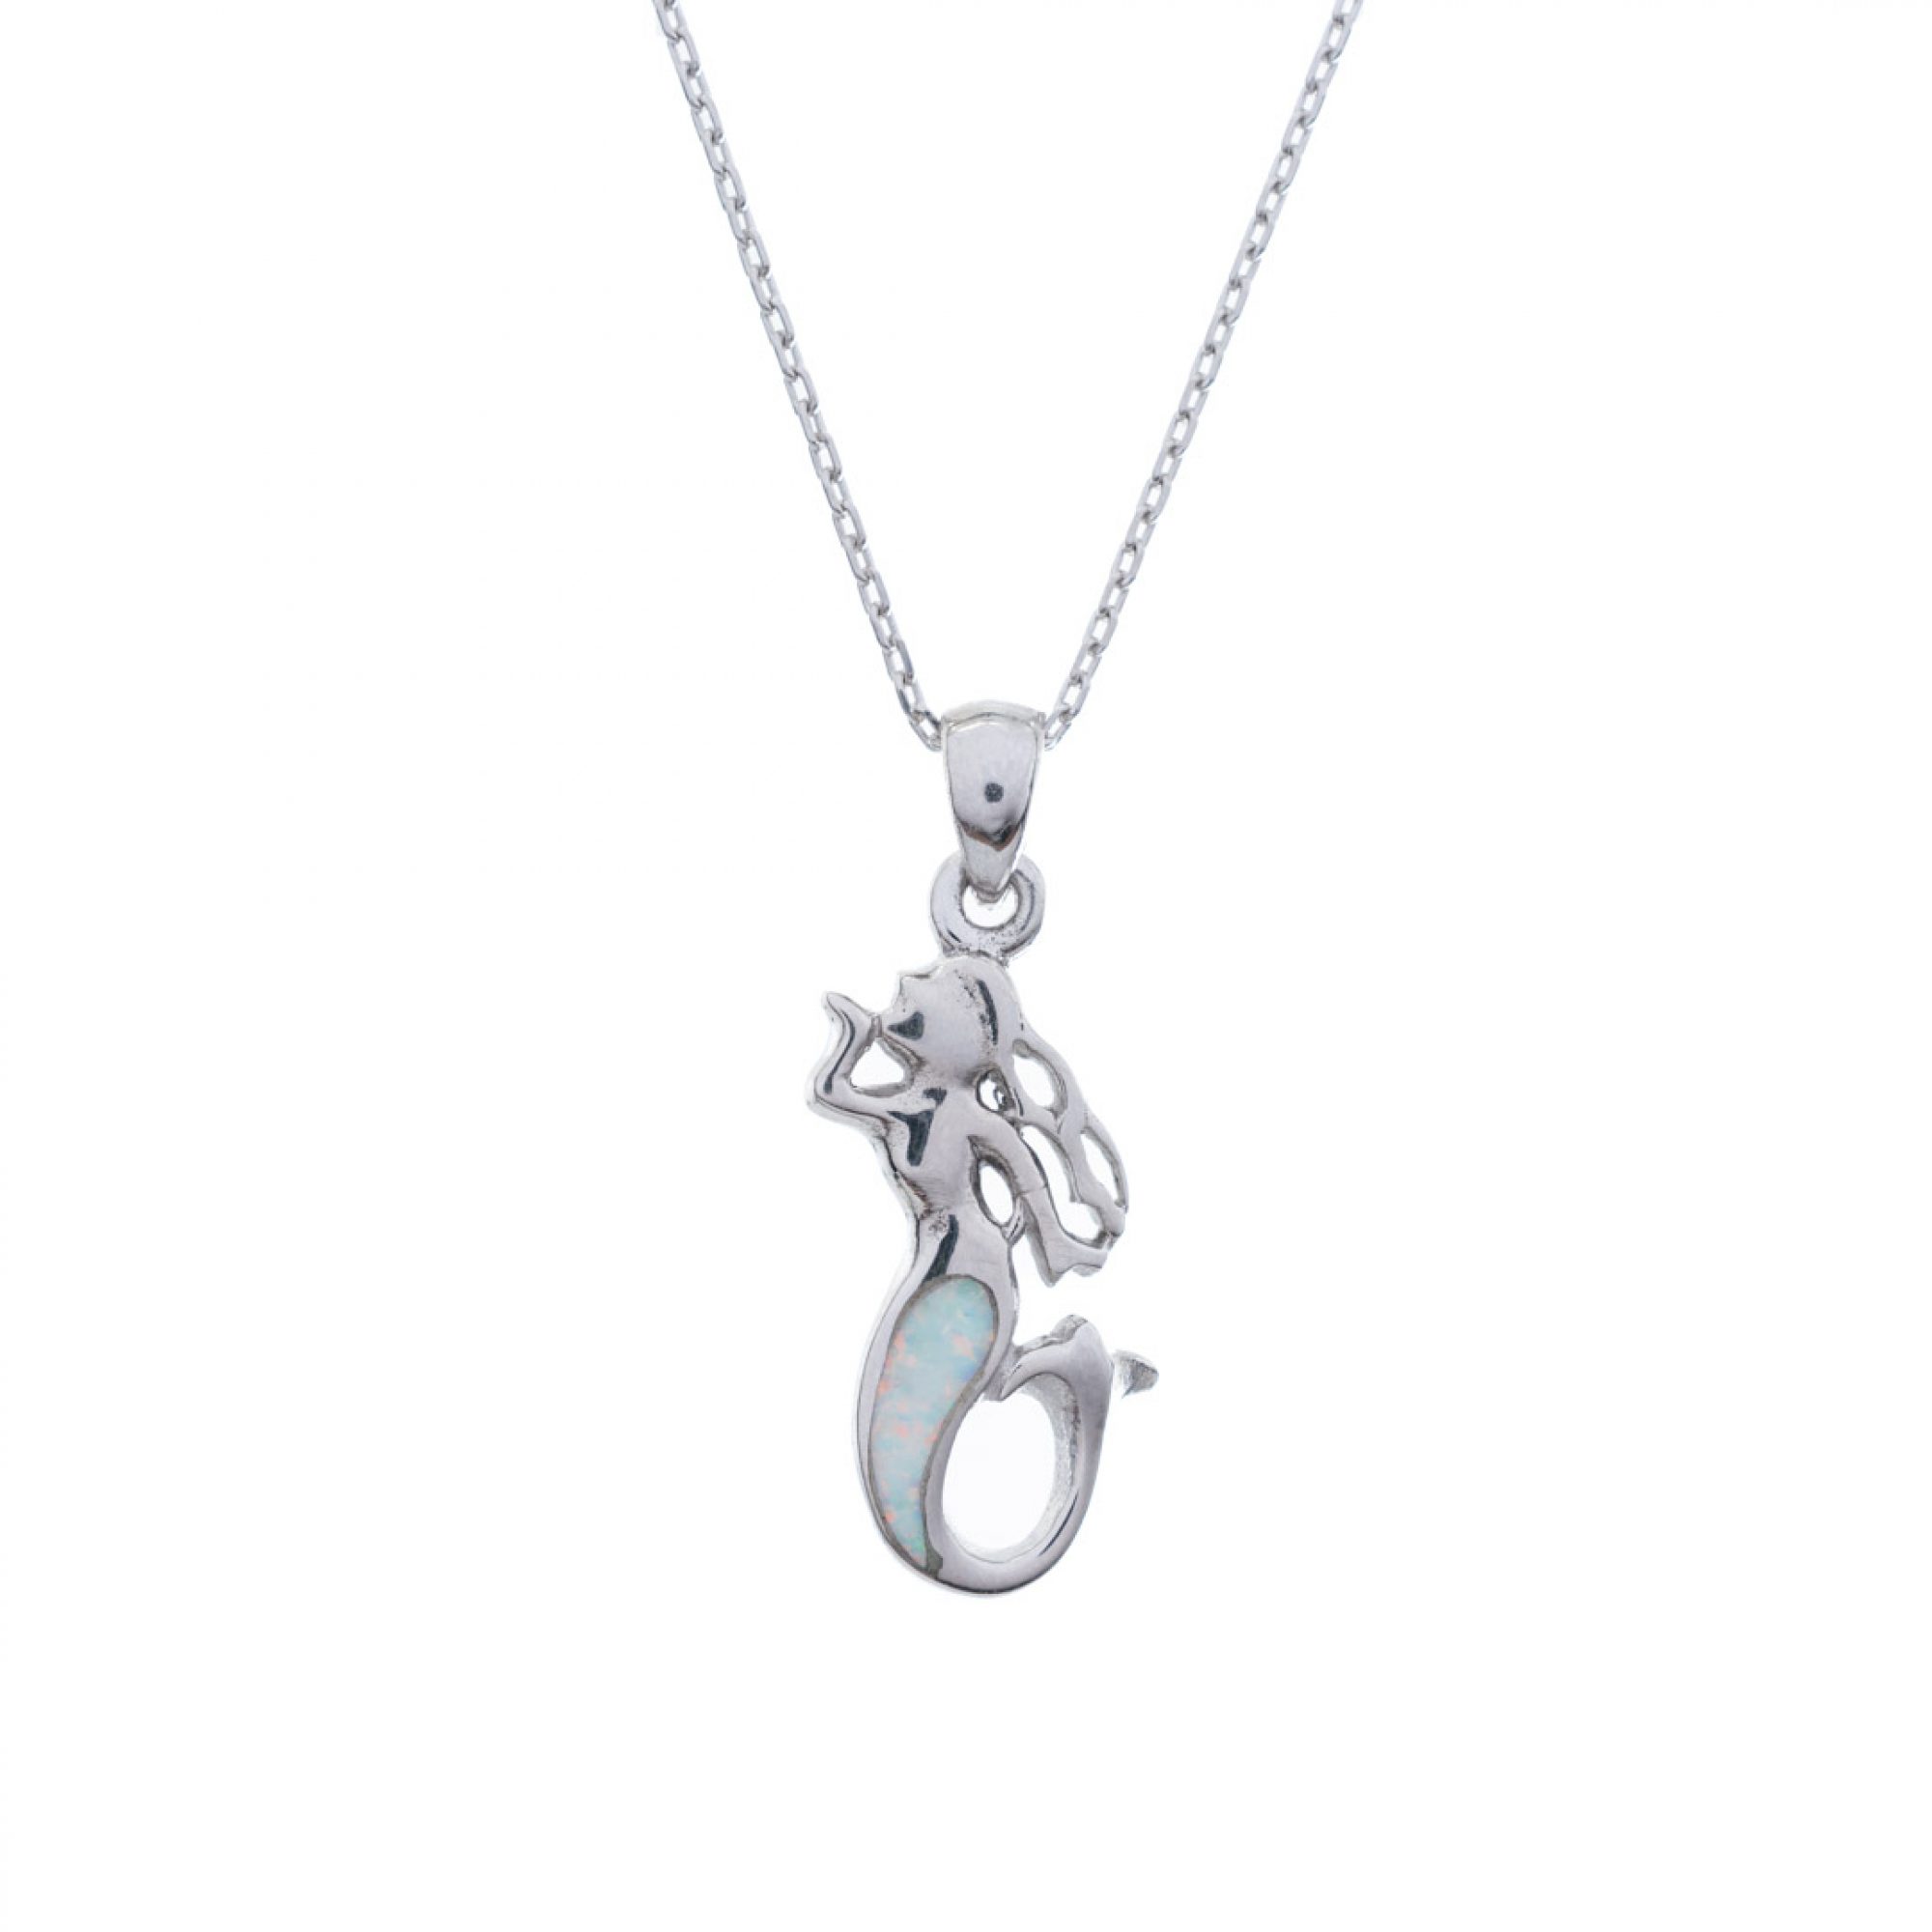 White opal mermaid pendant